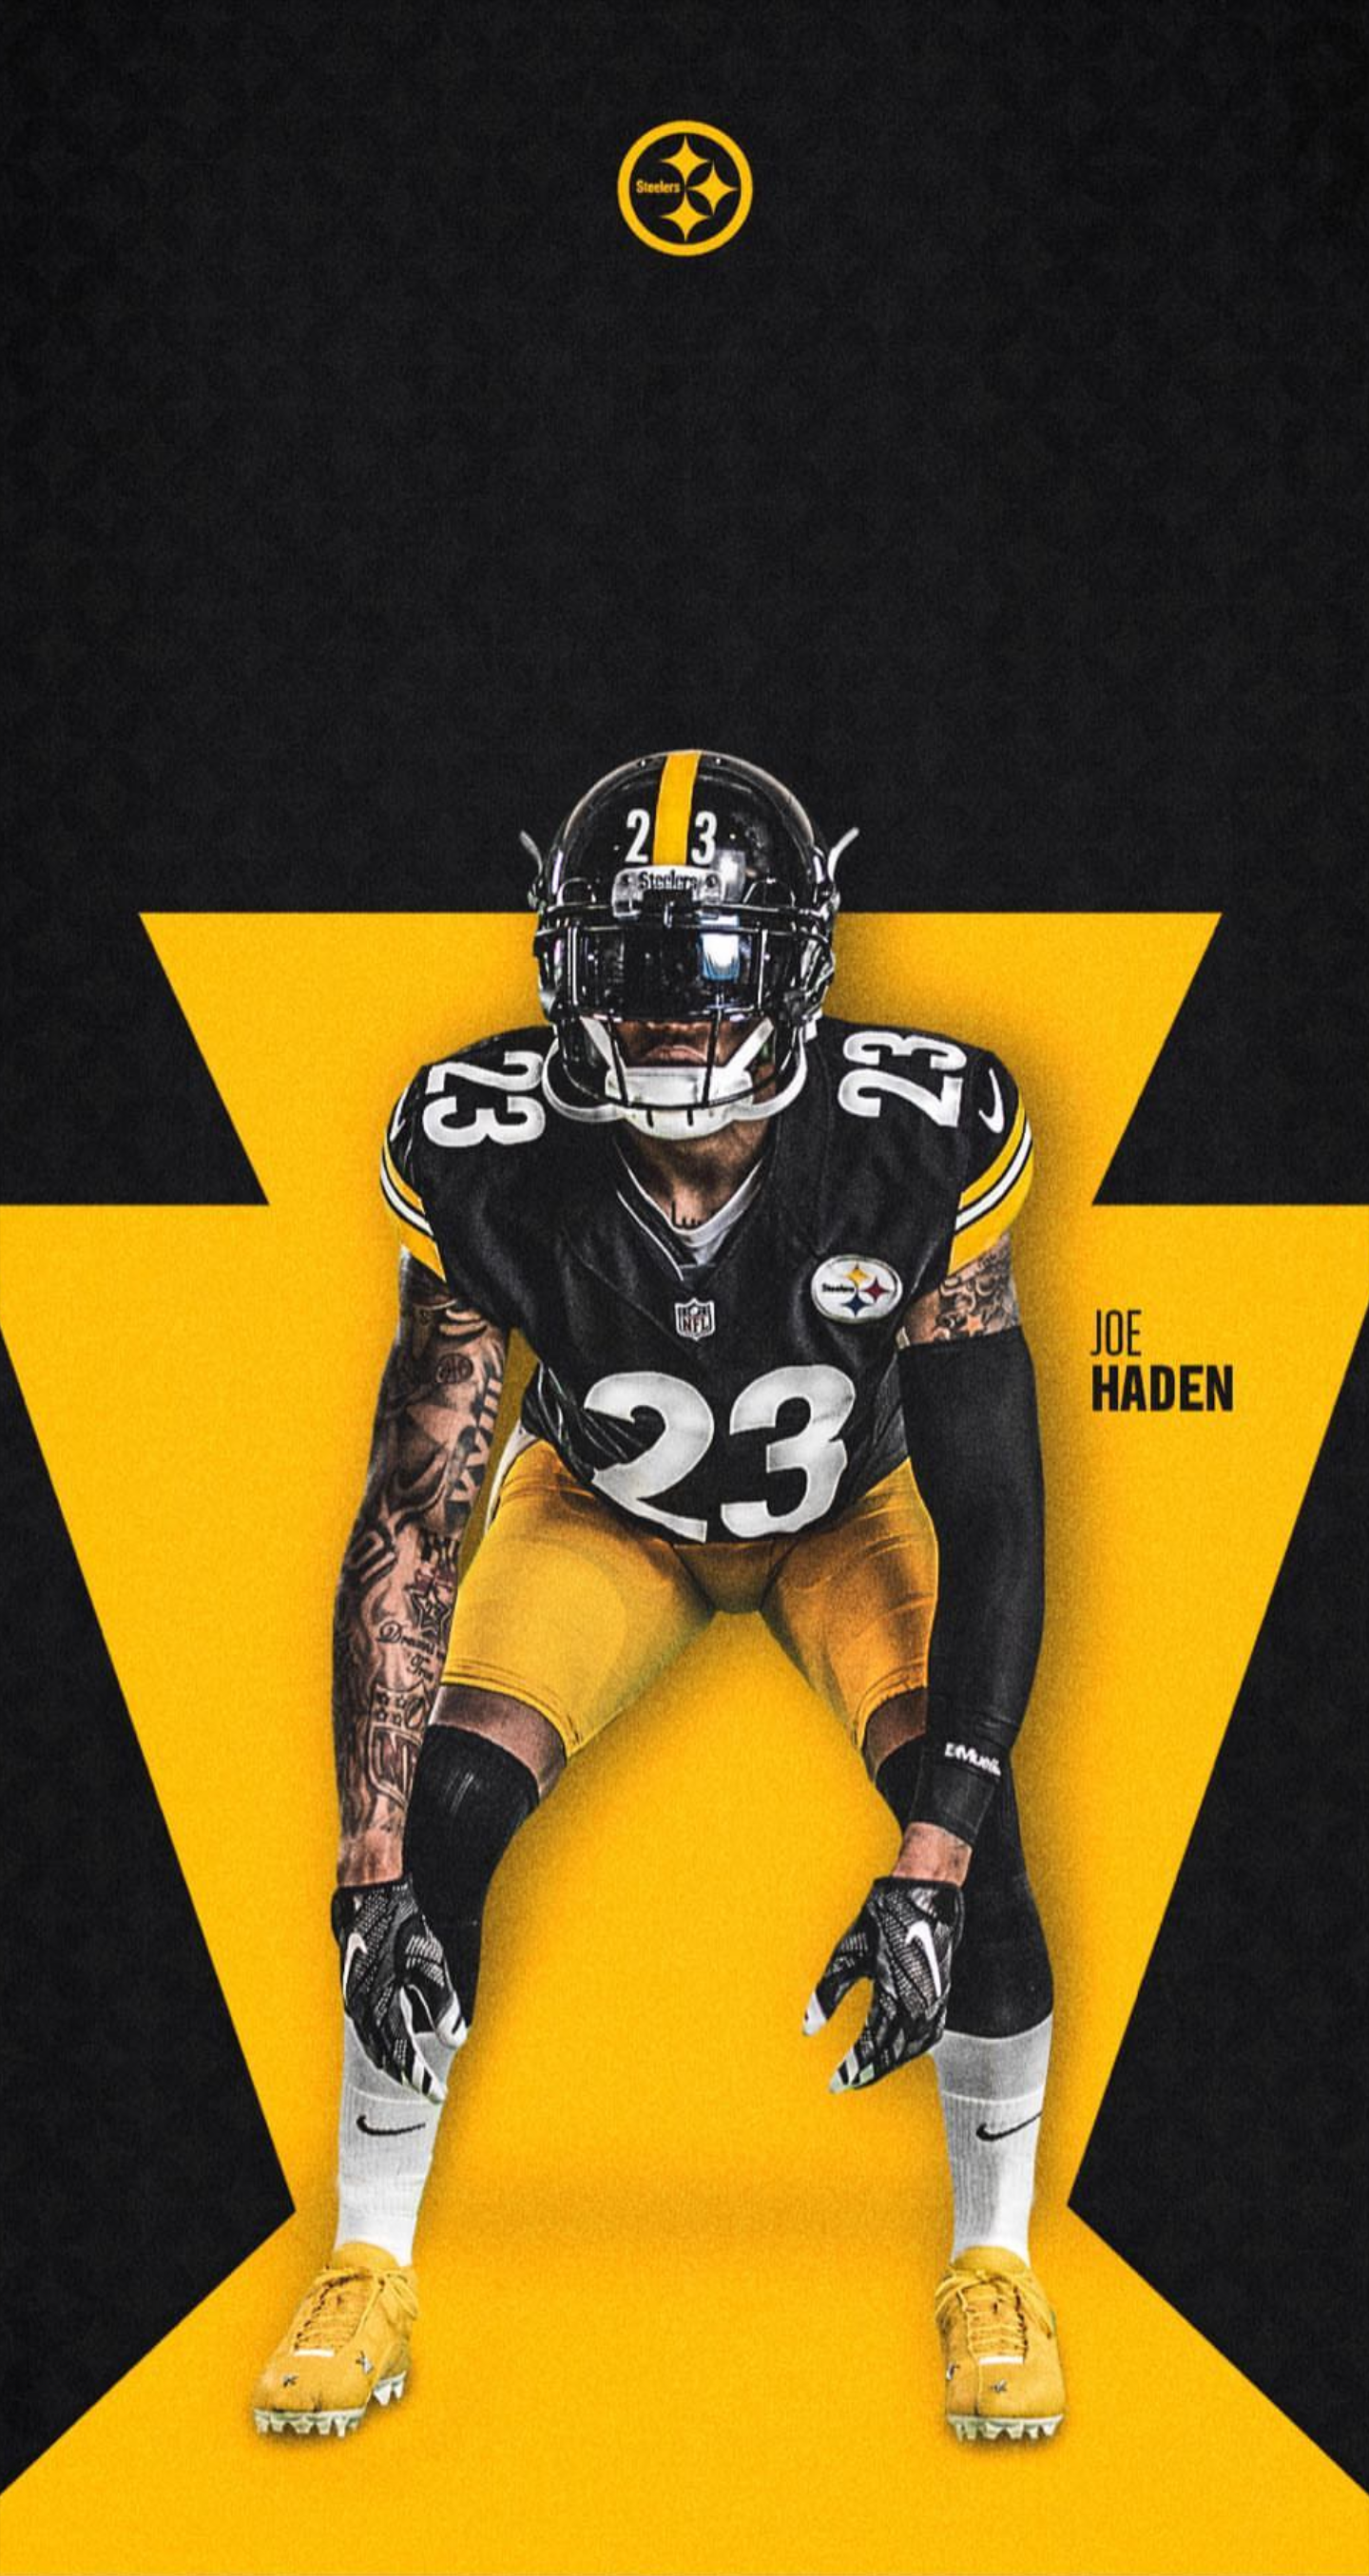 Joe Haden Wallpaper from Steelers Instagram